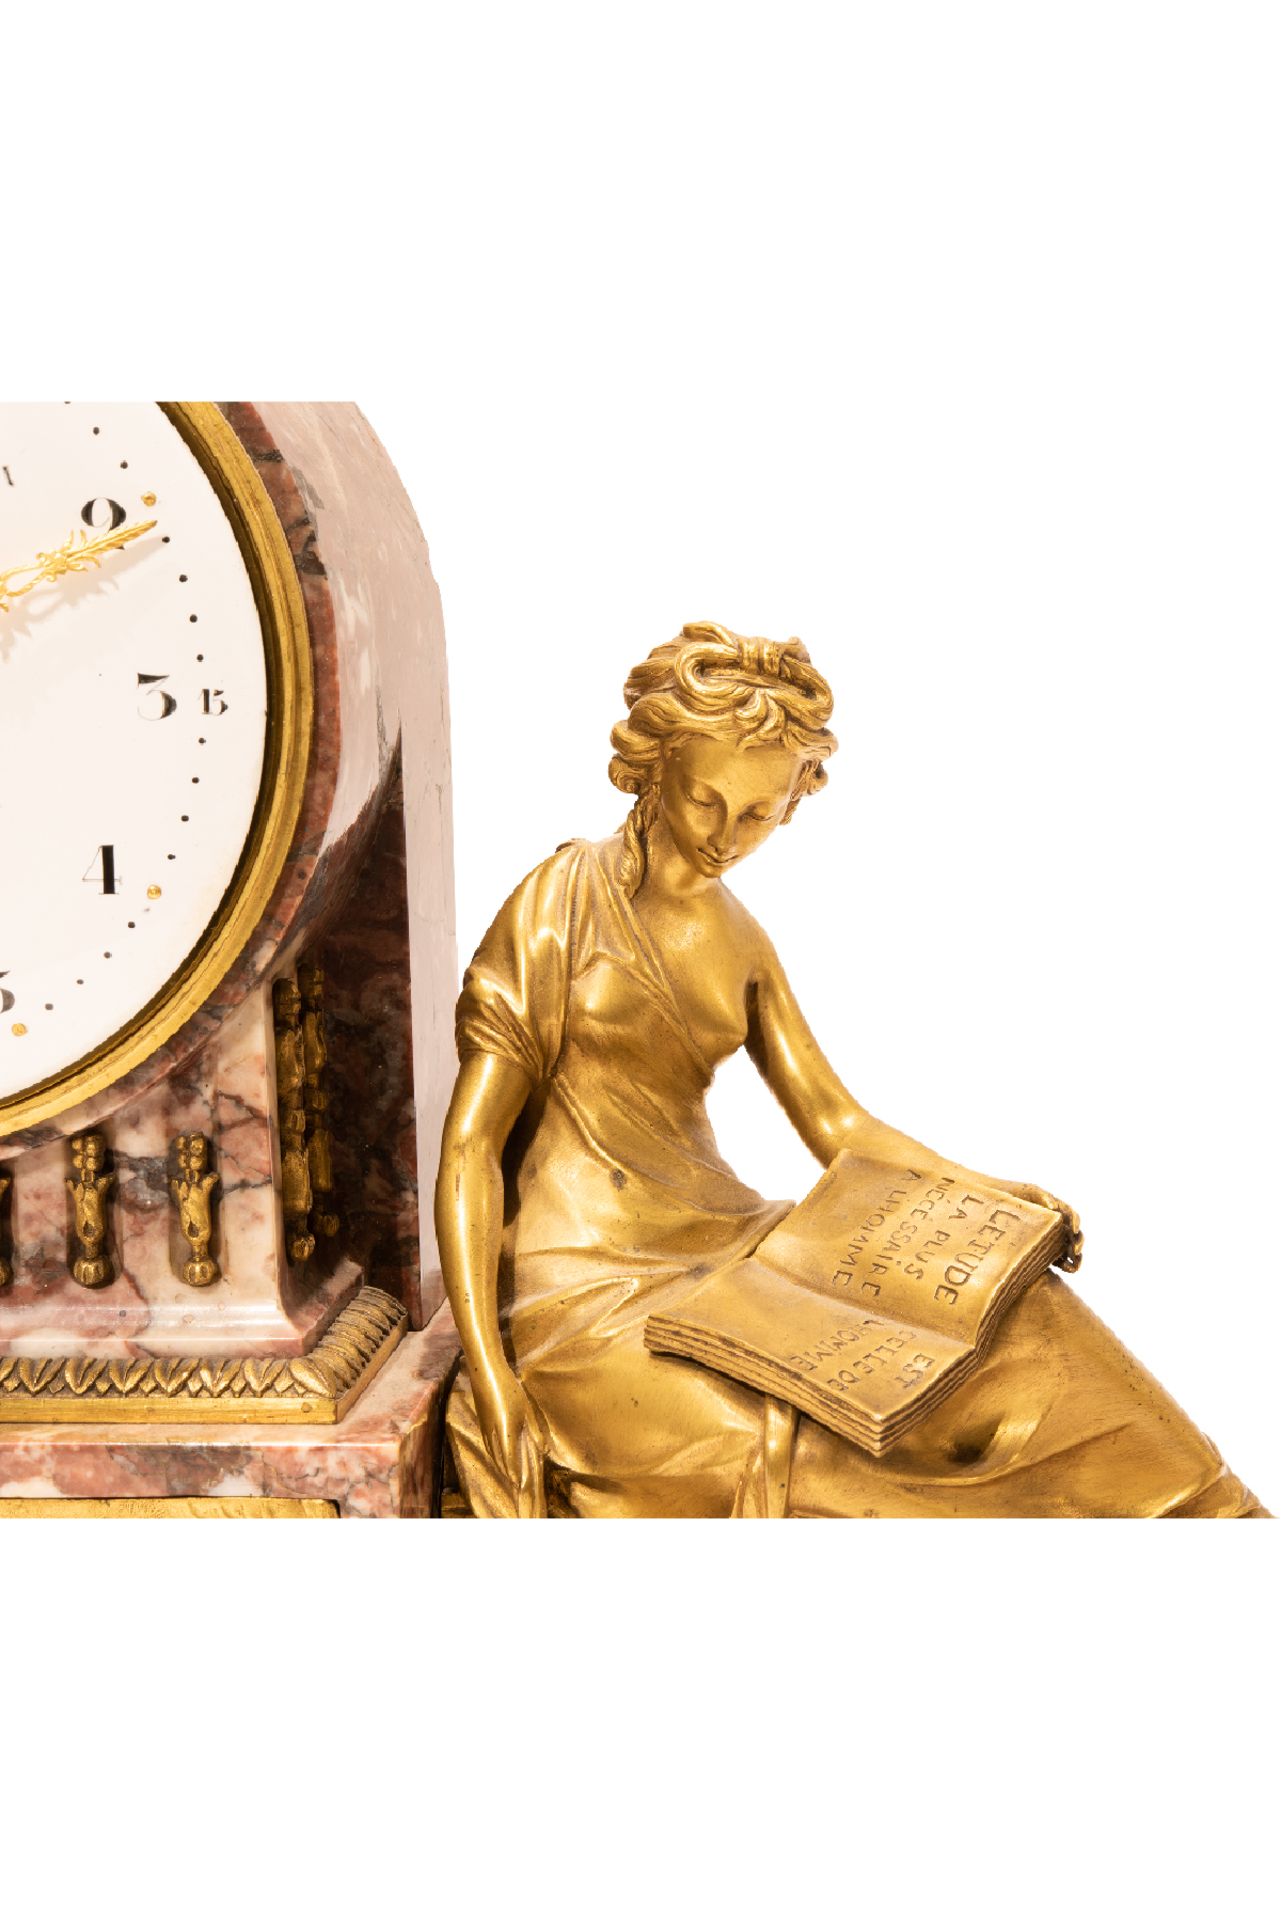 Franz Morawetz 1872-1924, Mantel clock - Image 3 of 7